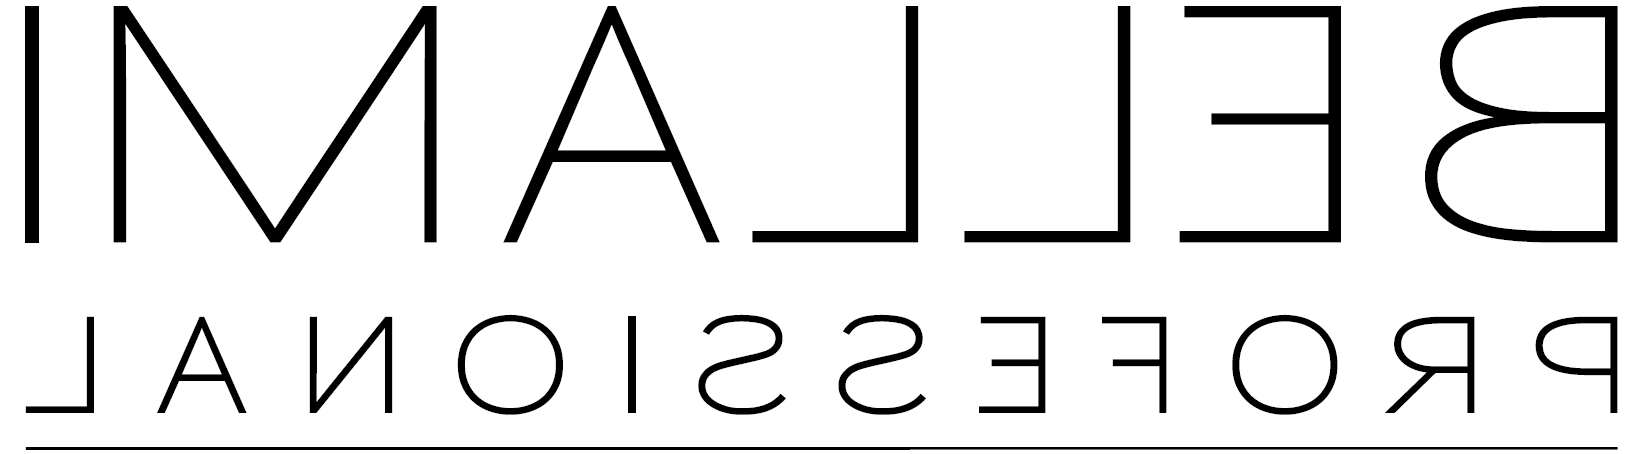 Bellami Professional logo